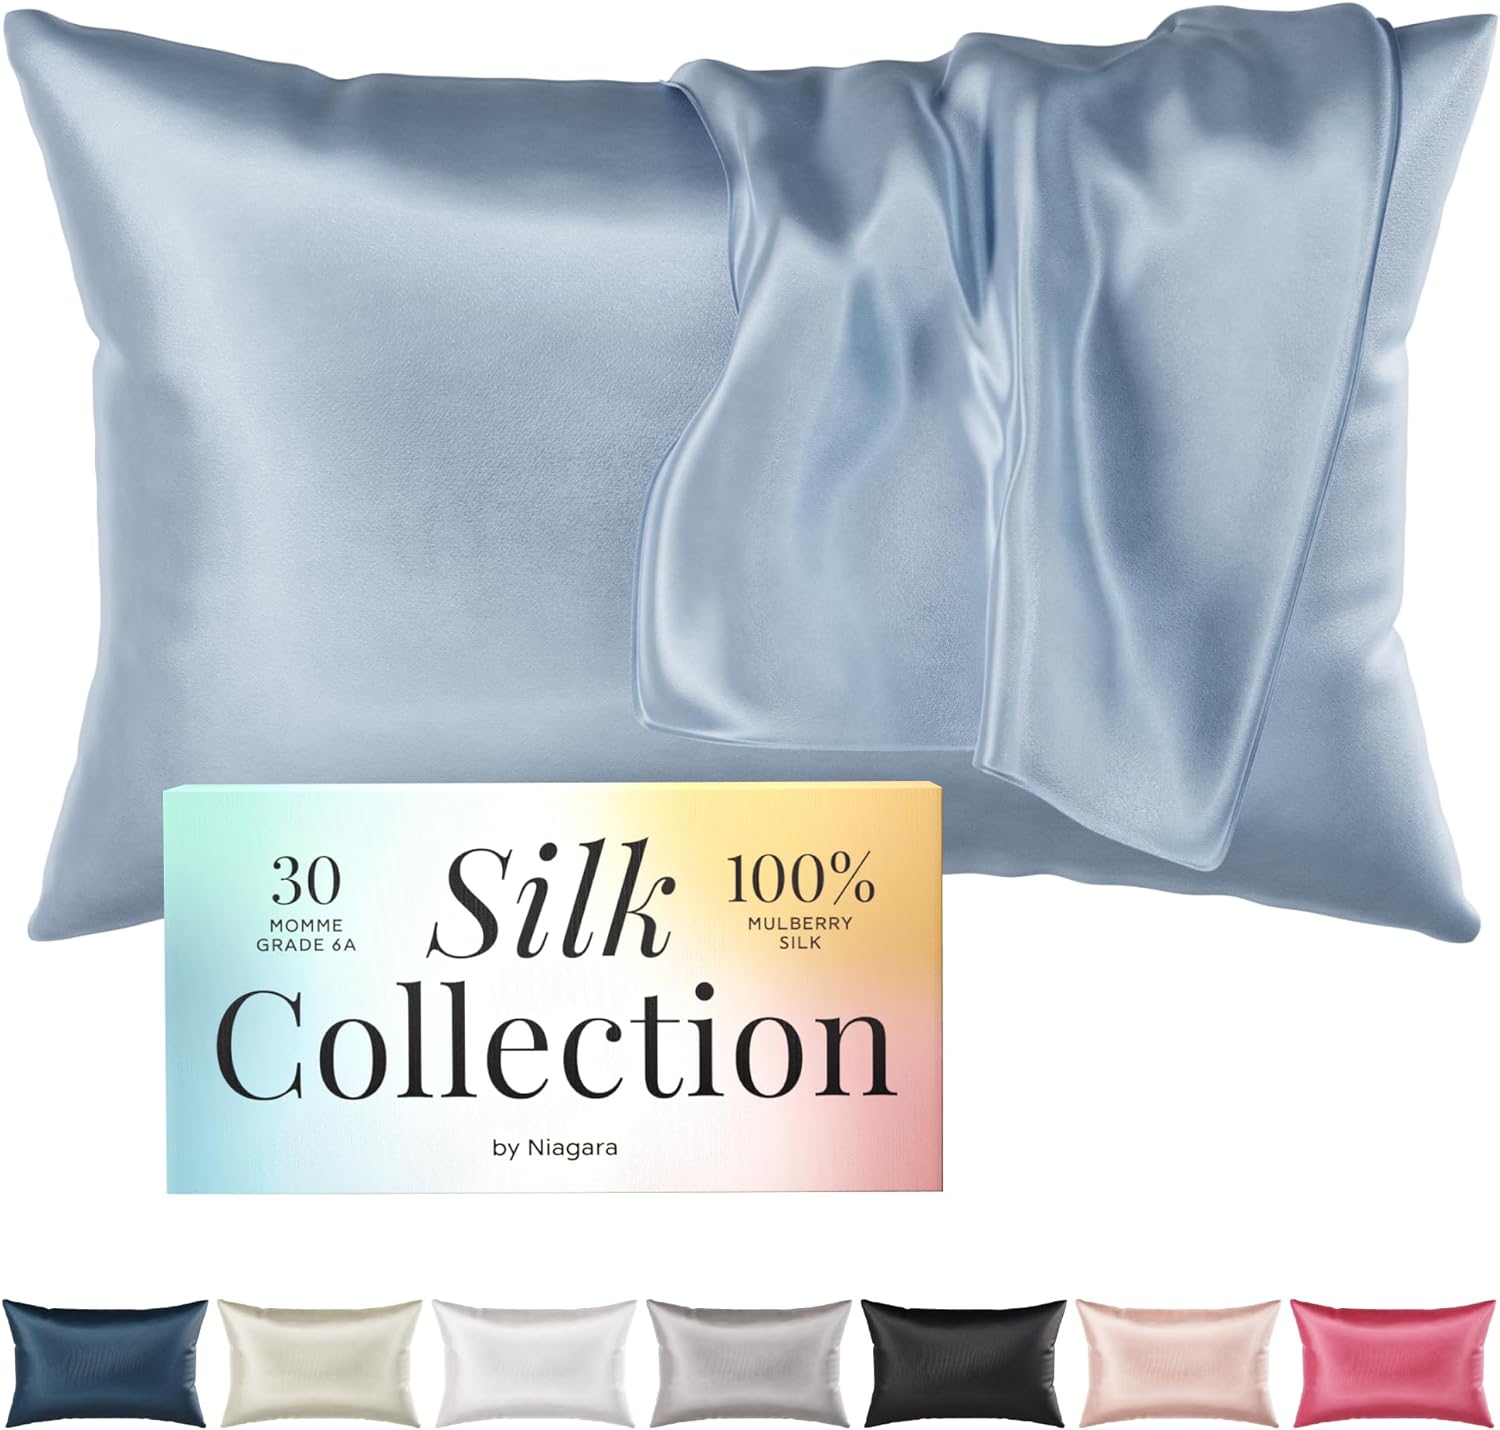 Niagara 100% Mulberry Silk Pillowcase - 30 Momme Silk Pillow case for Hair and Skin - Grade 6A Silk Pillow Cases with Zipper - Soft & Cooling Blue Silk Pillowcase Queen Size (20x30)